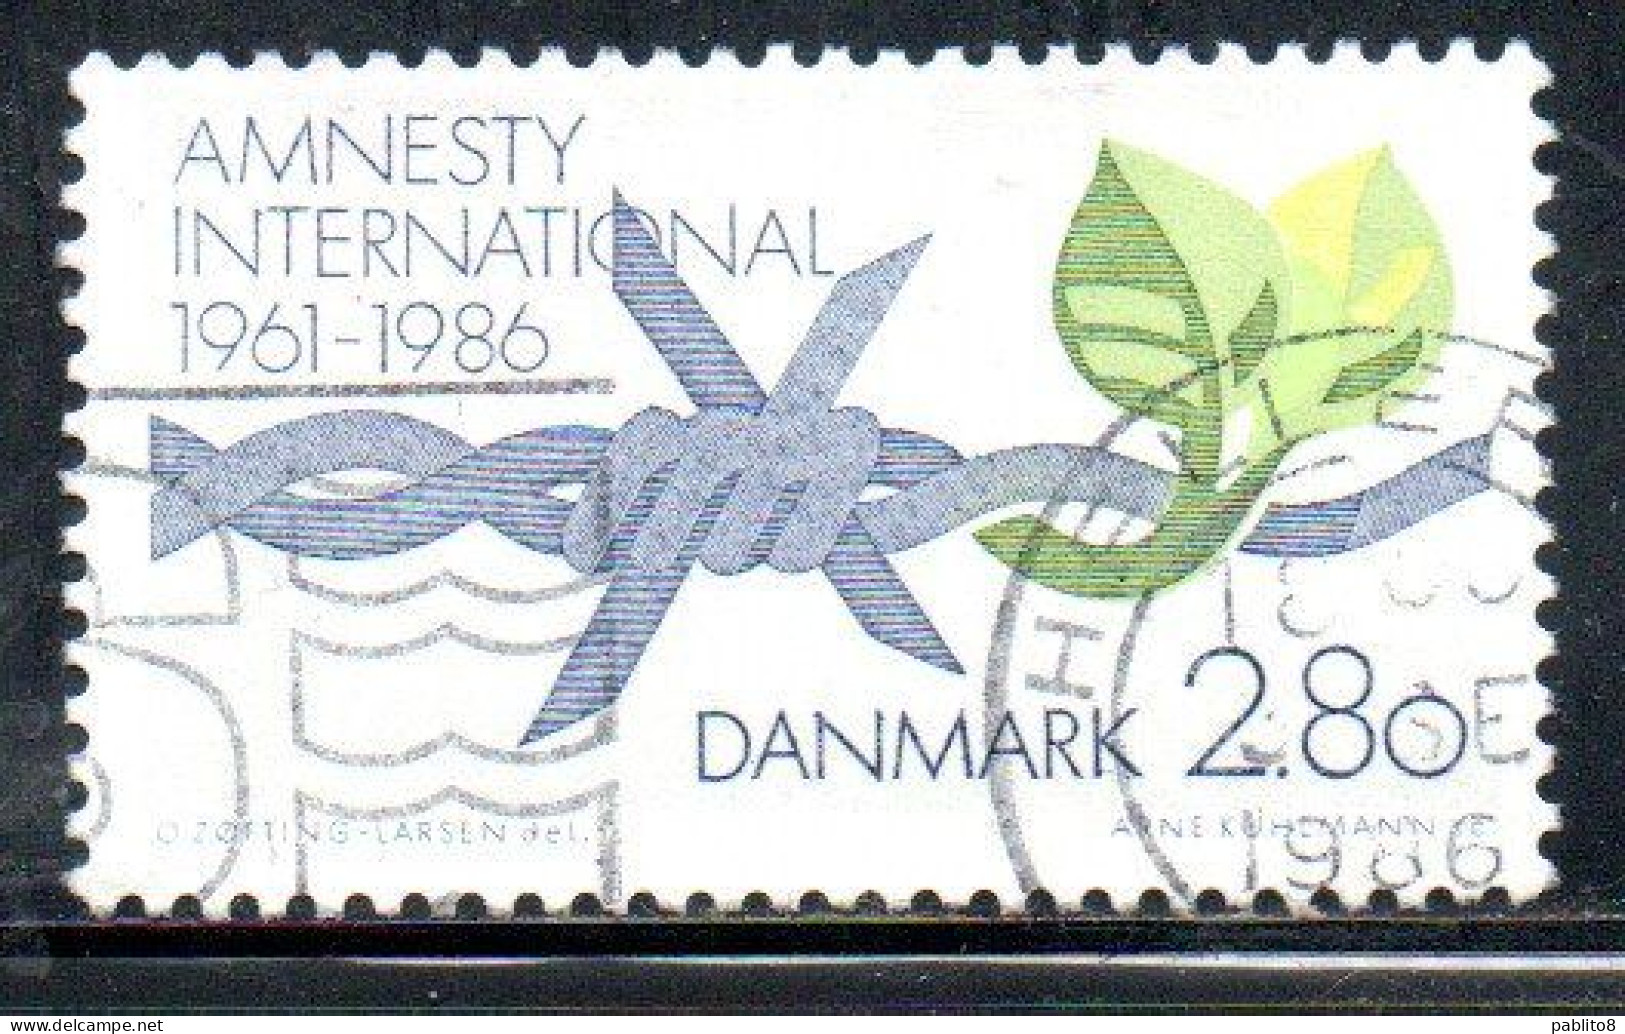 DANEMARK DANMARK DENMARK DANIMARCA 1986 AMNESTY INTERNATIONAL 2.80k USED USATO OBLITERE' - Used Stamps